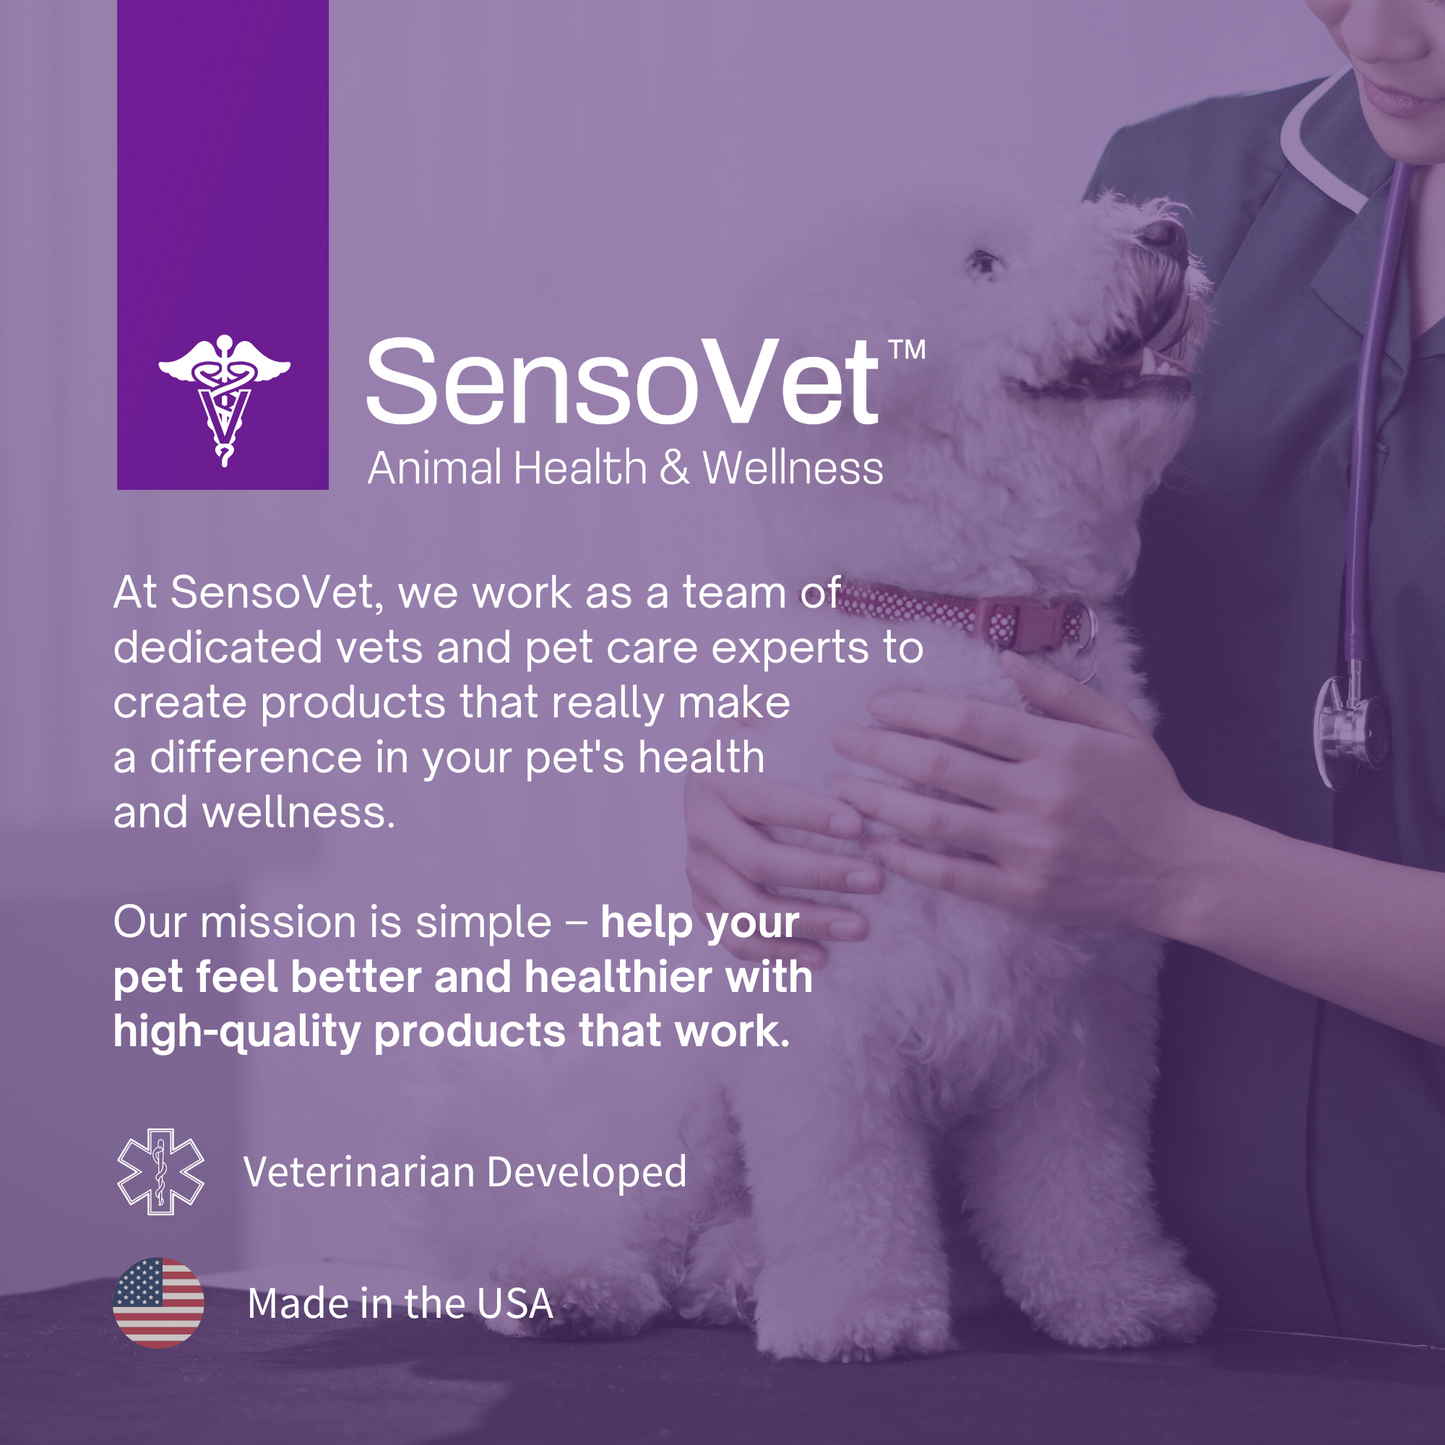 sensovet animal health and wellness